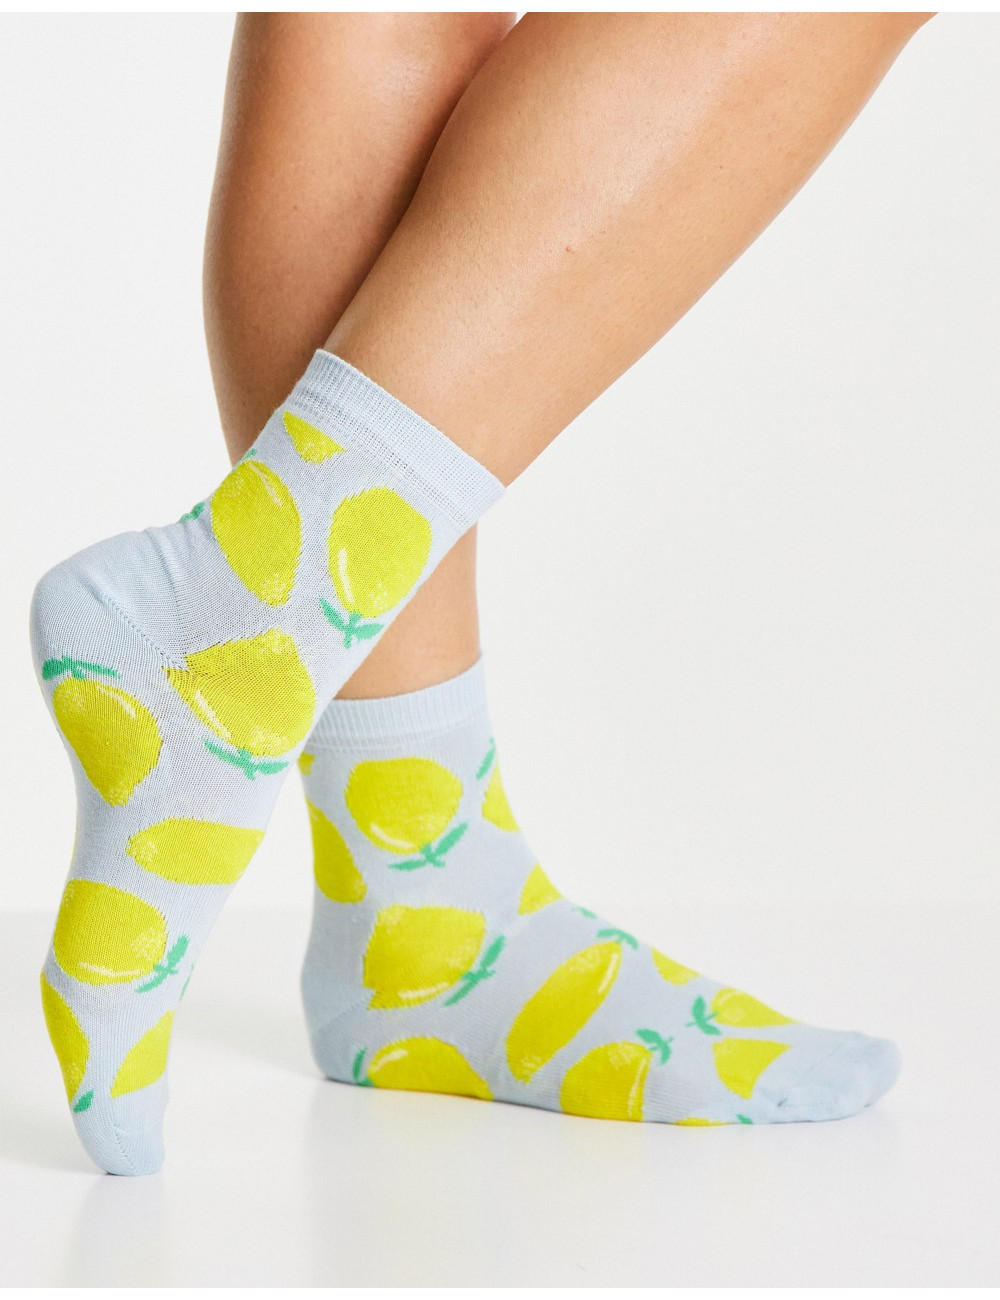 Accessorize socks in lemon...